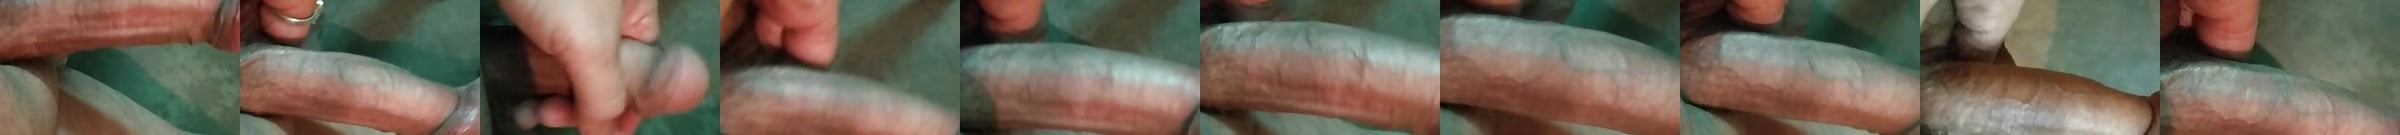 Latin Threesome Shower Fuck Gay Brazilian Studz Porn 01 XHamster